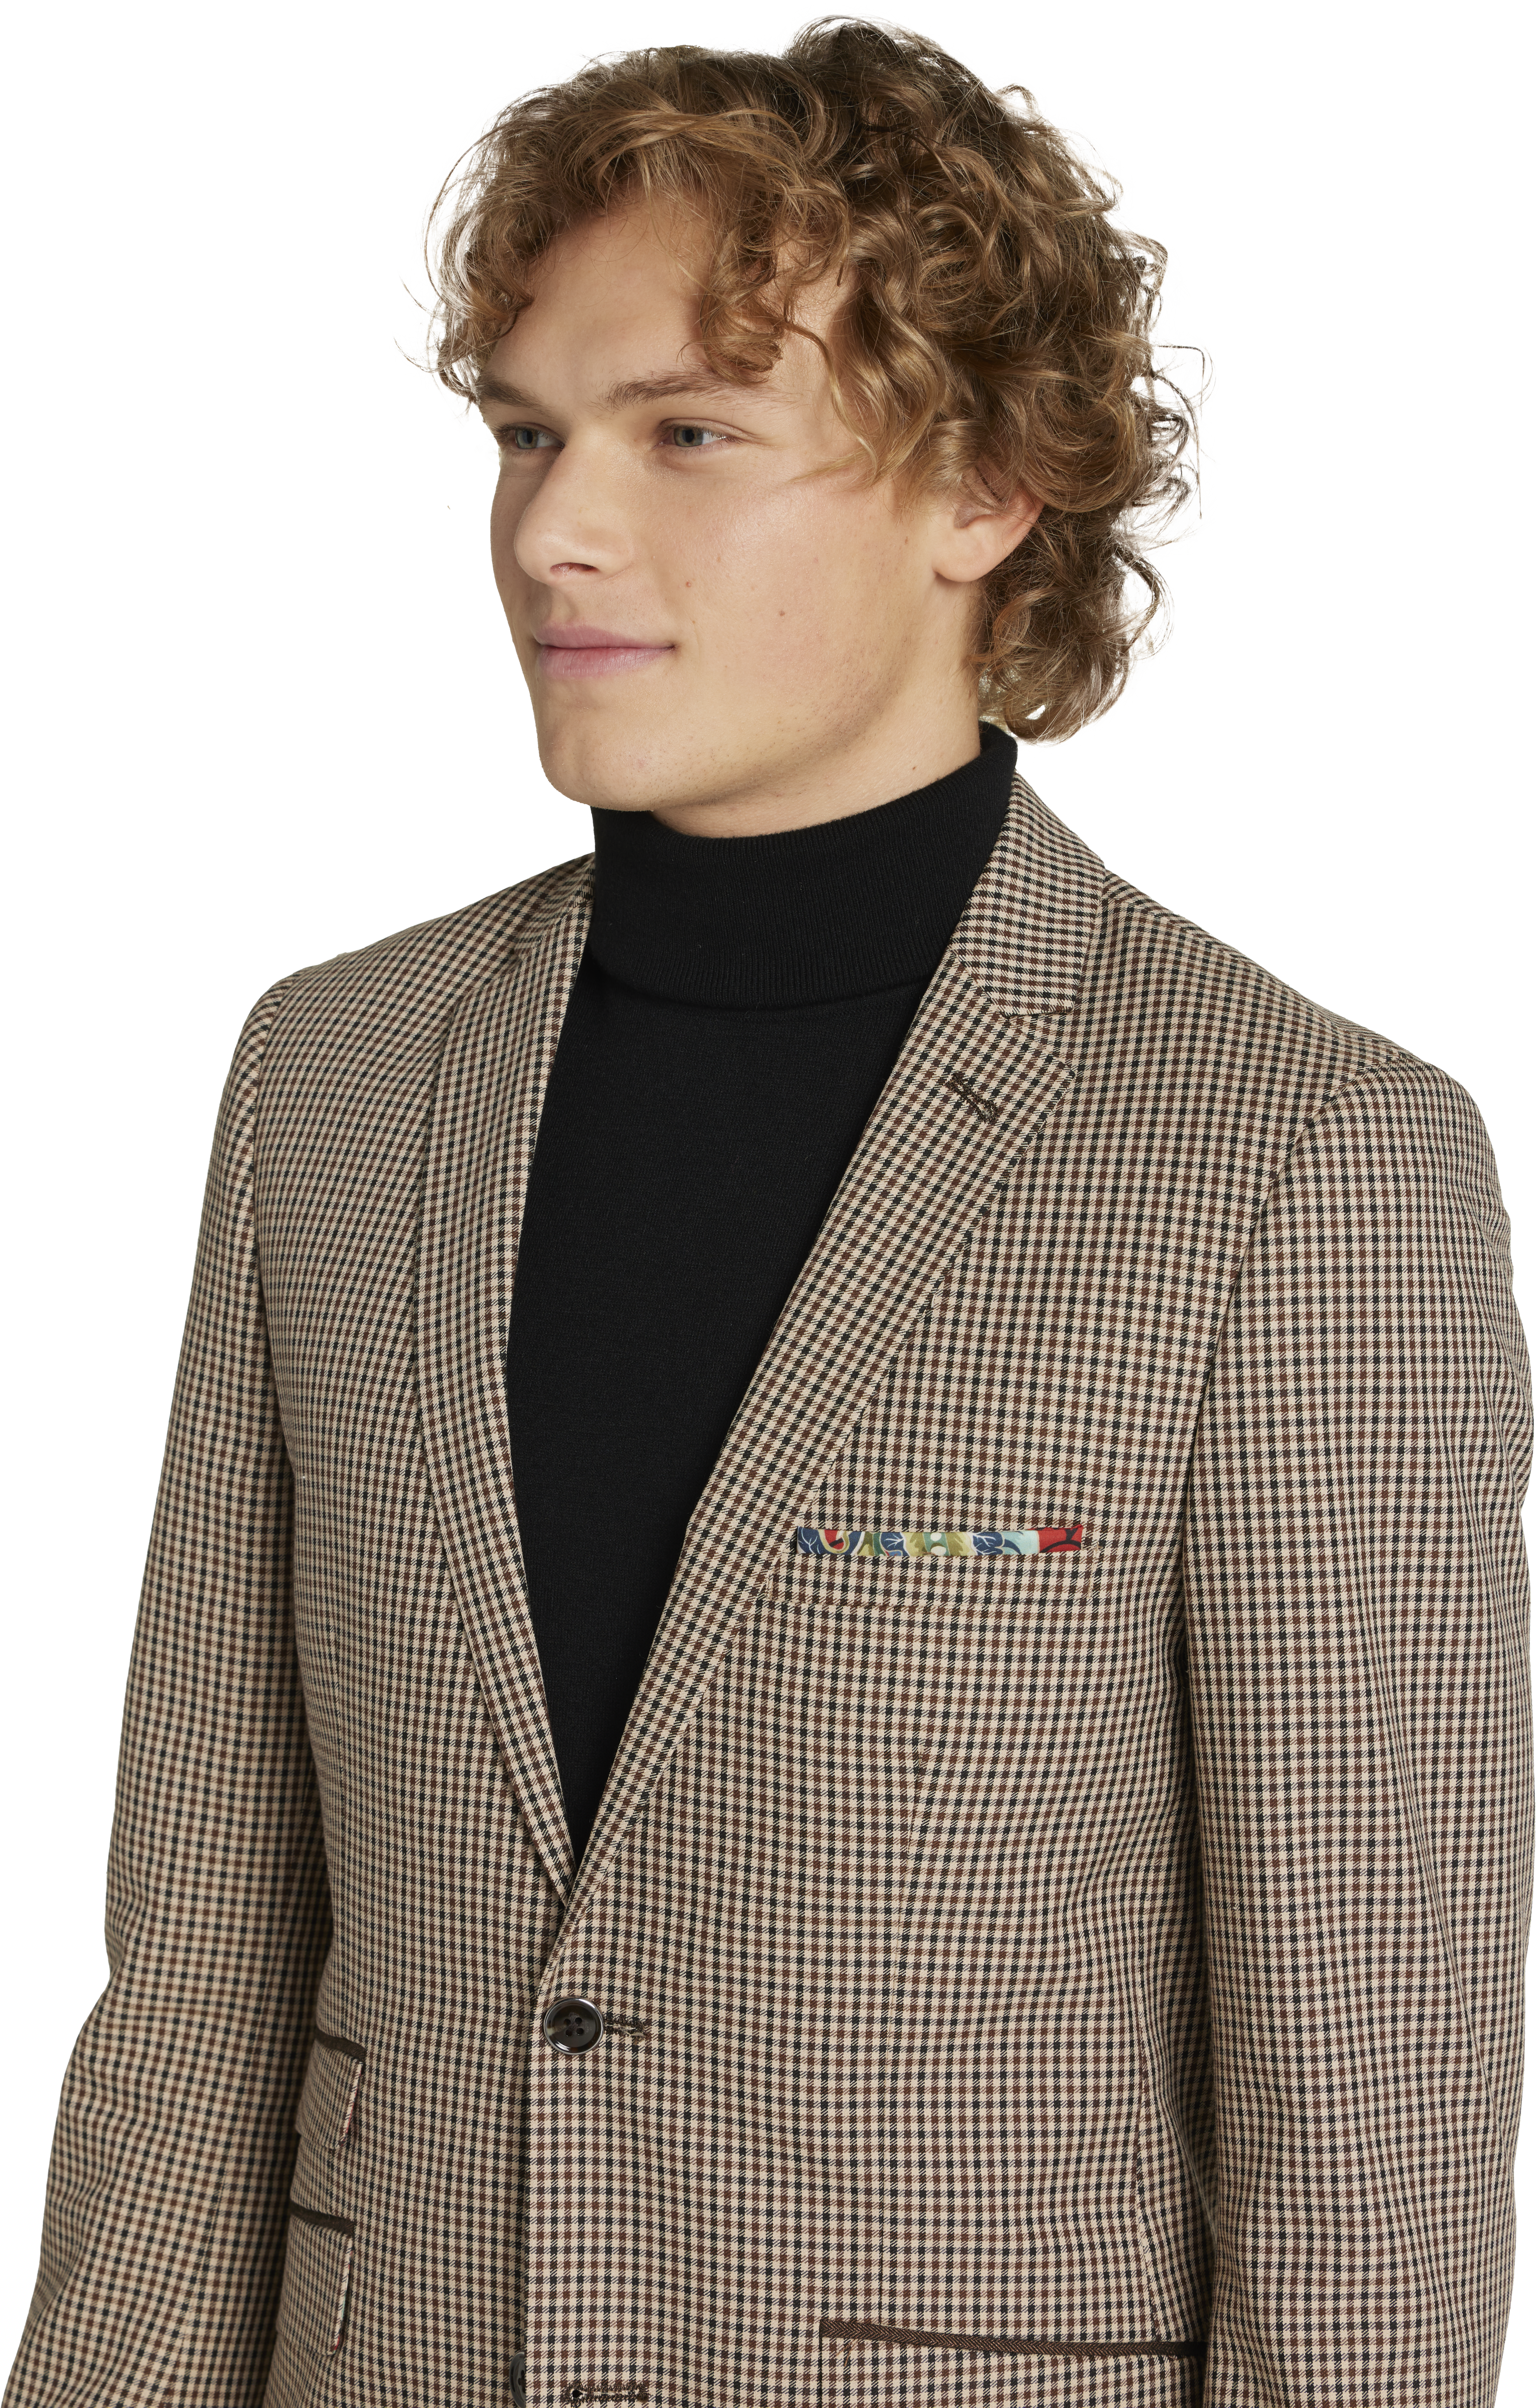 Slim Fit Gingham Suit Separates Jacket